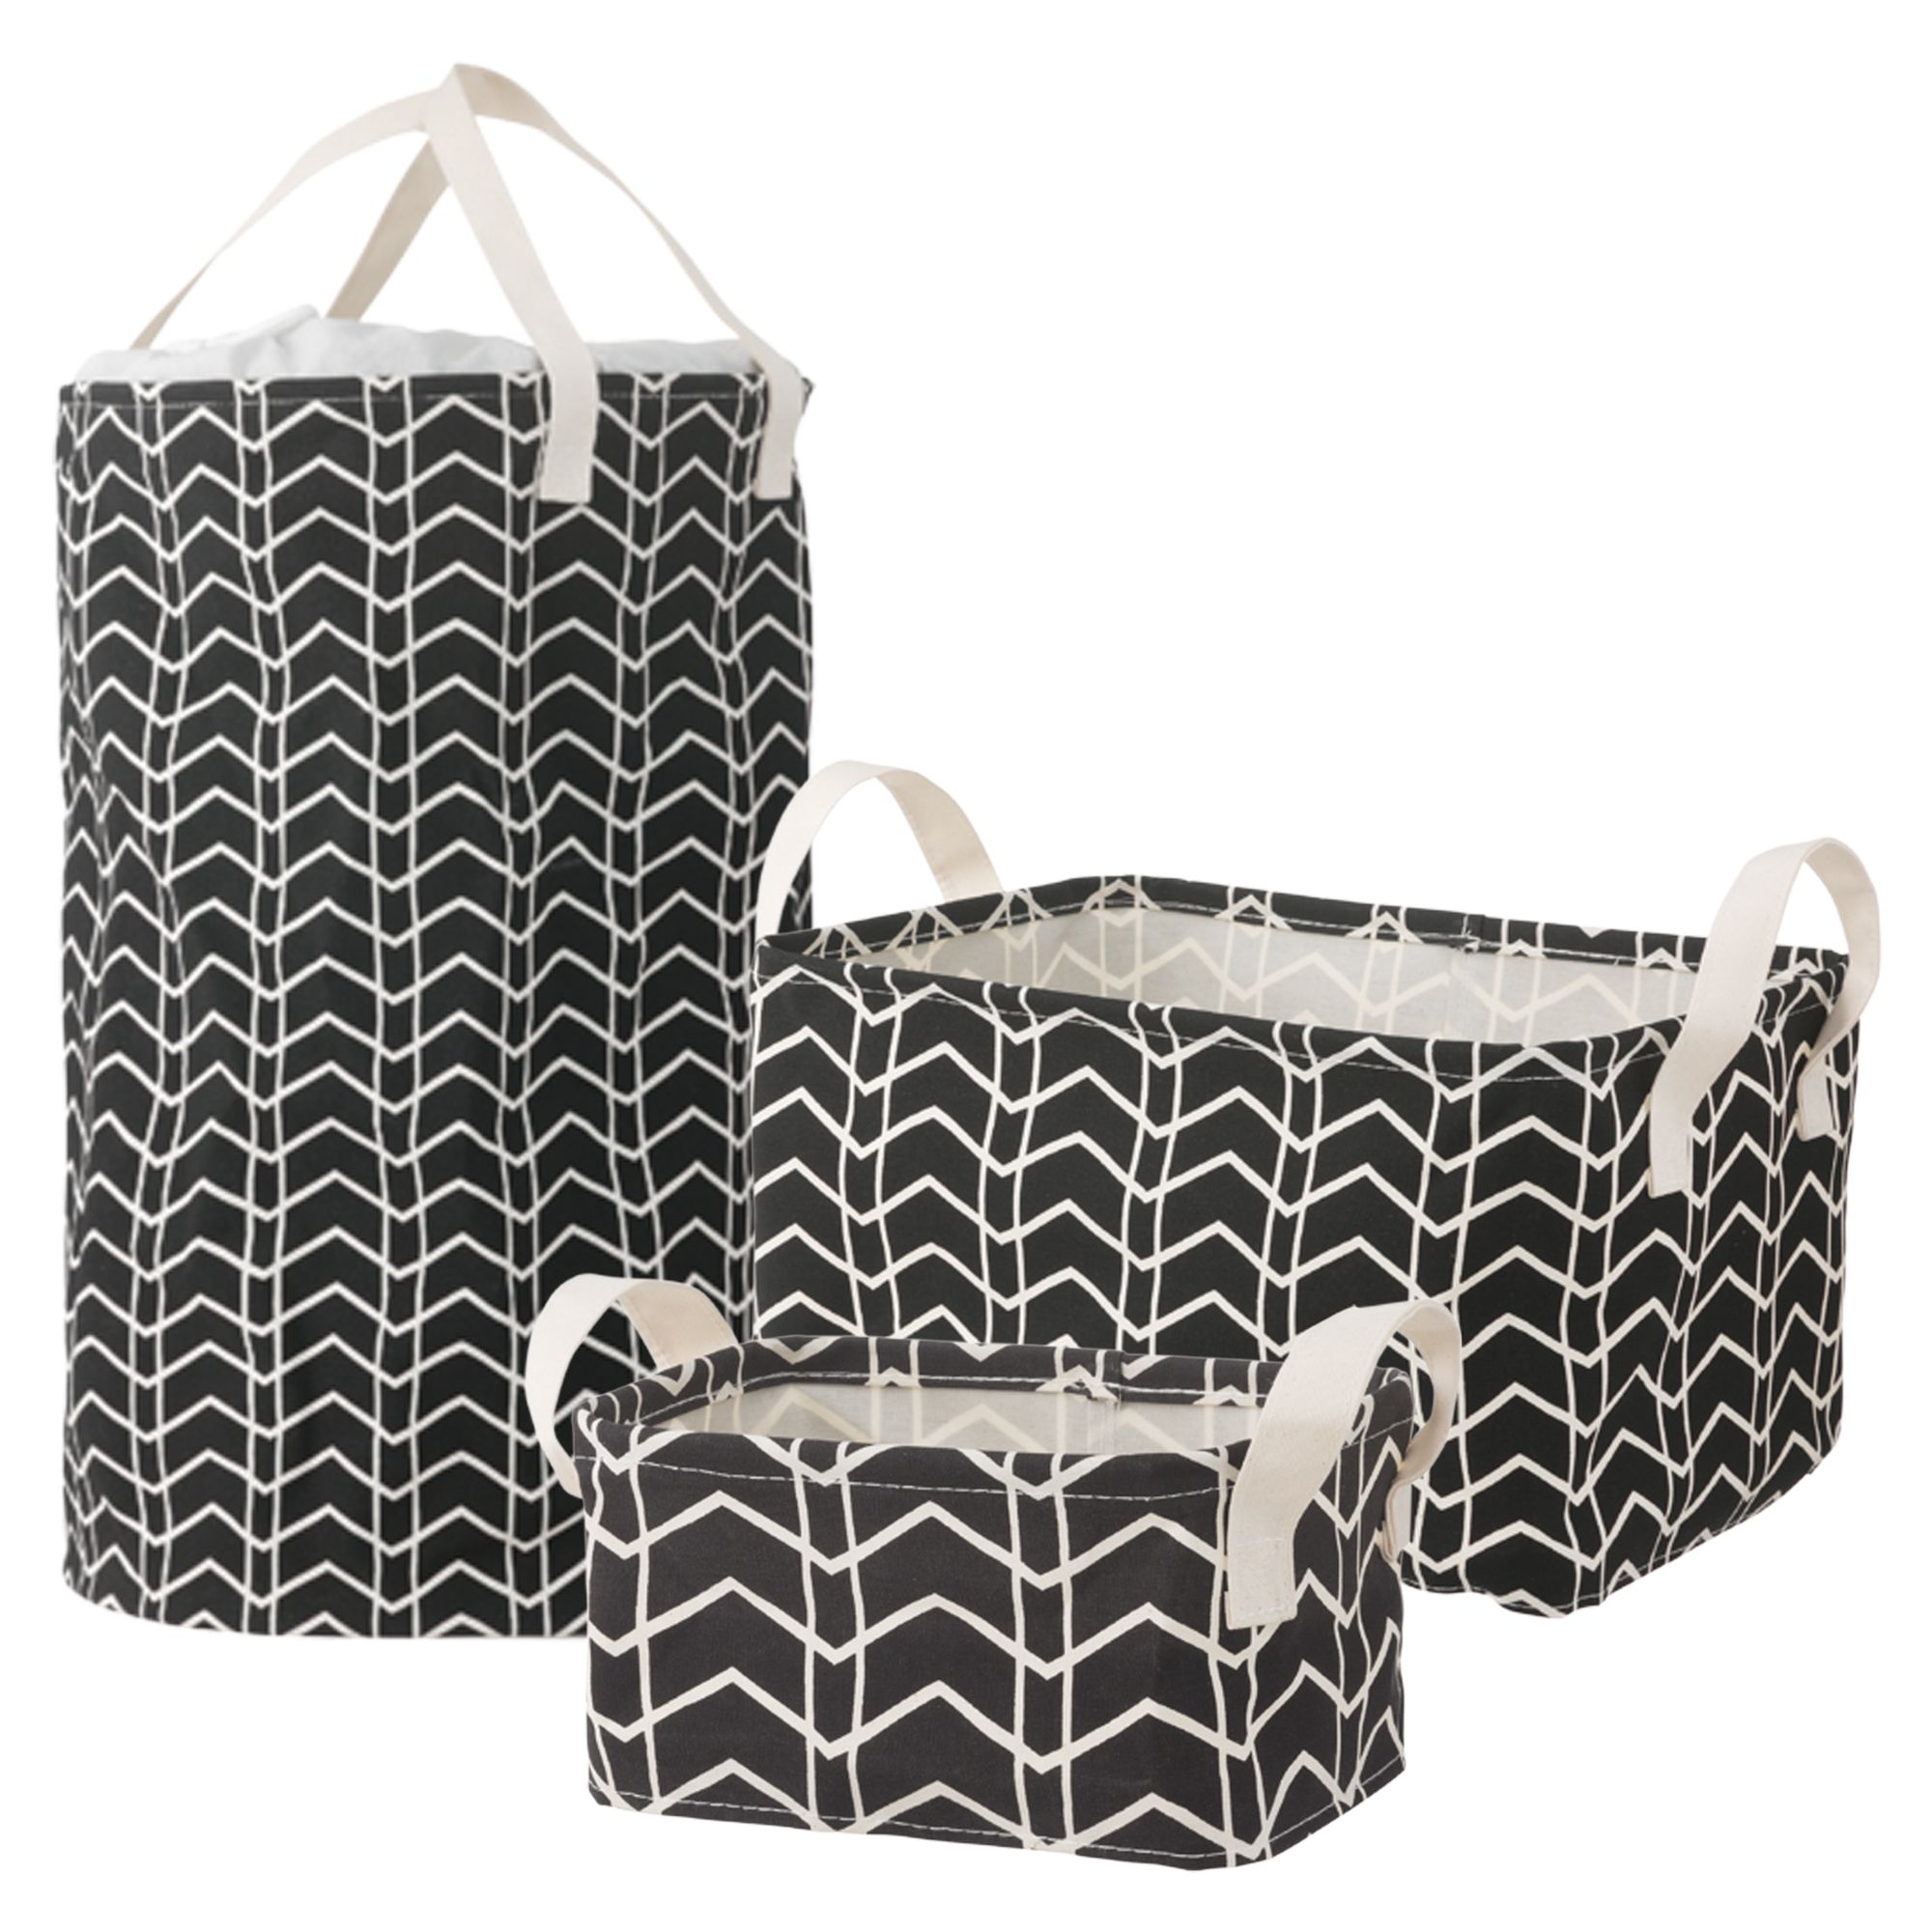 HEMA Chevron Canvas Storage Basket Set - Modern Black and White Zig Zag - Set of 3 - Ideal for or... | Walmart (US)